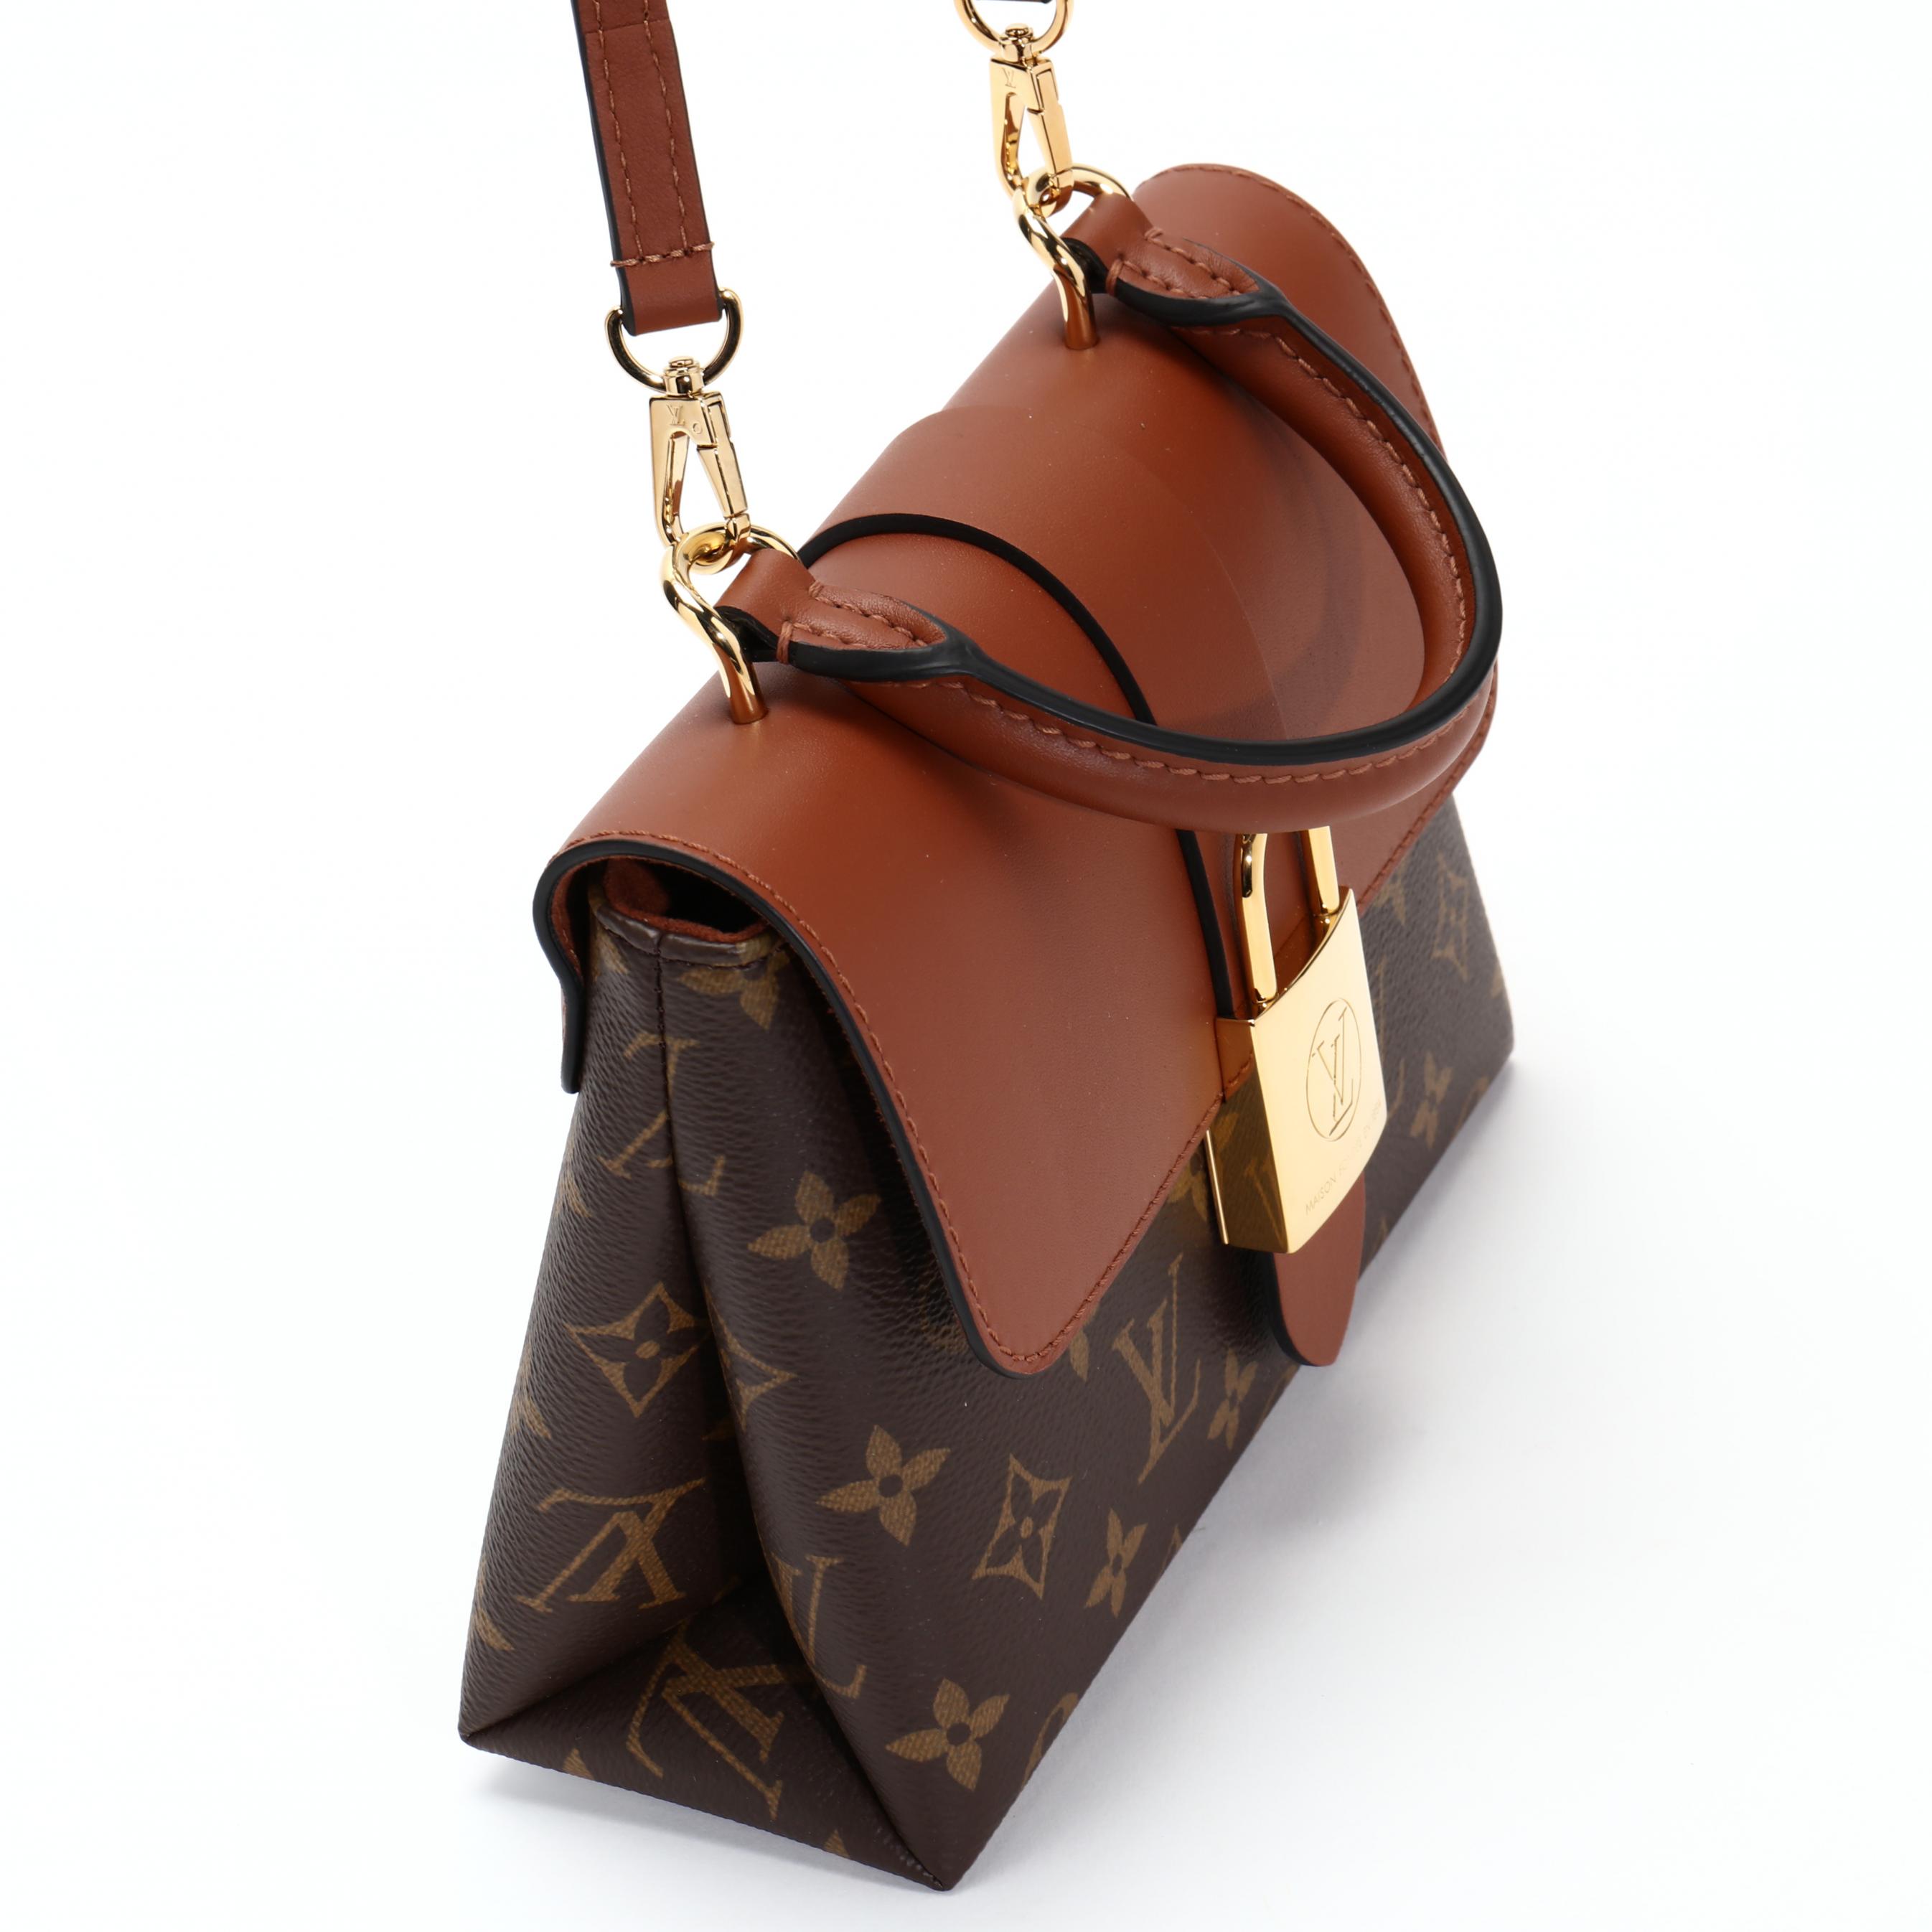 Sold at Auction: Vintage Louis Vuitton Monogram Locky BB Hand Bag